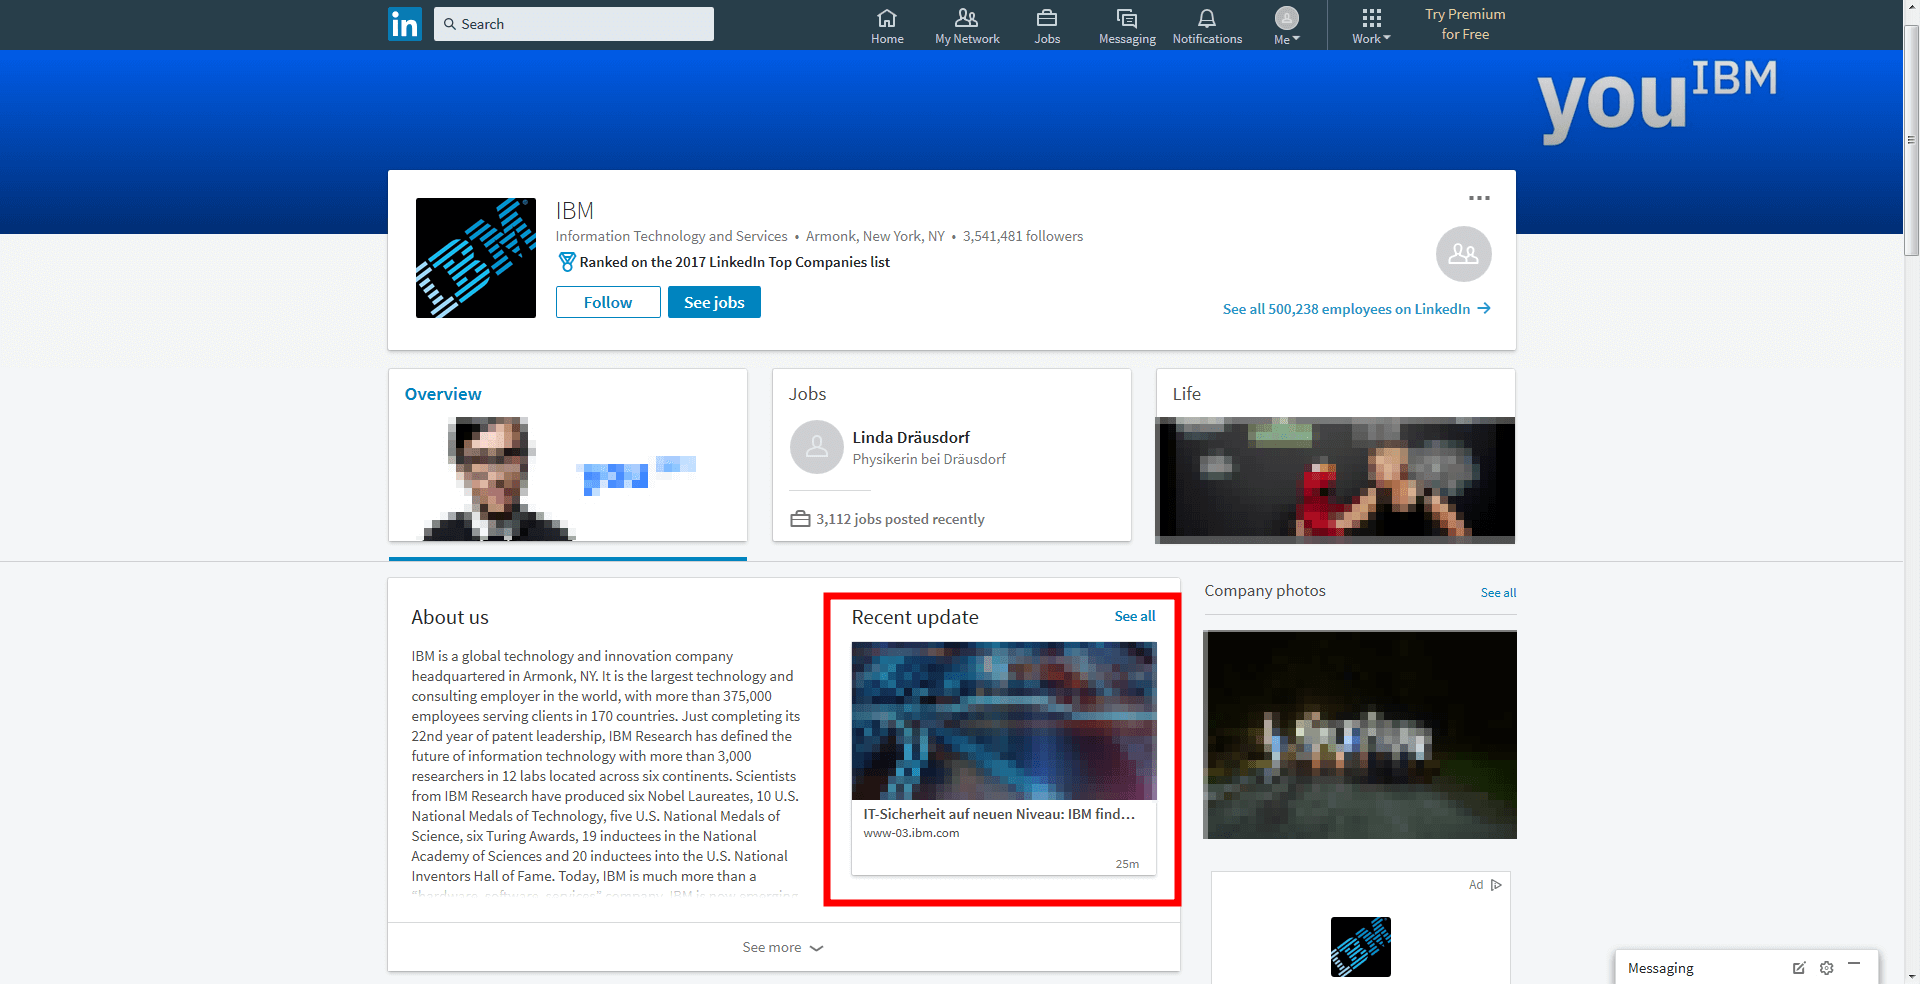 IBM’s company page on LinkedIn